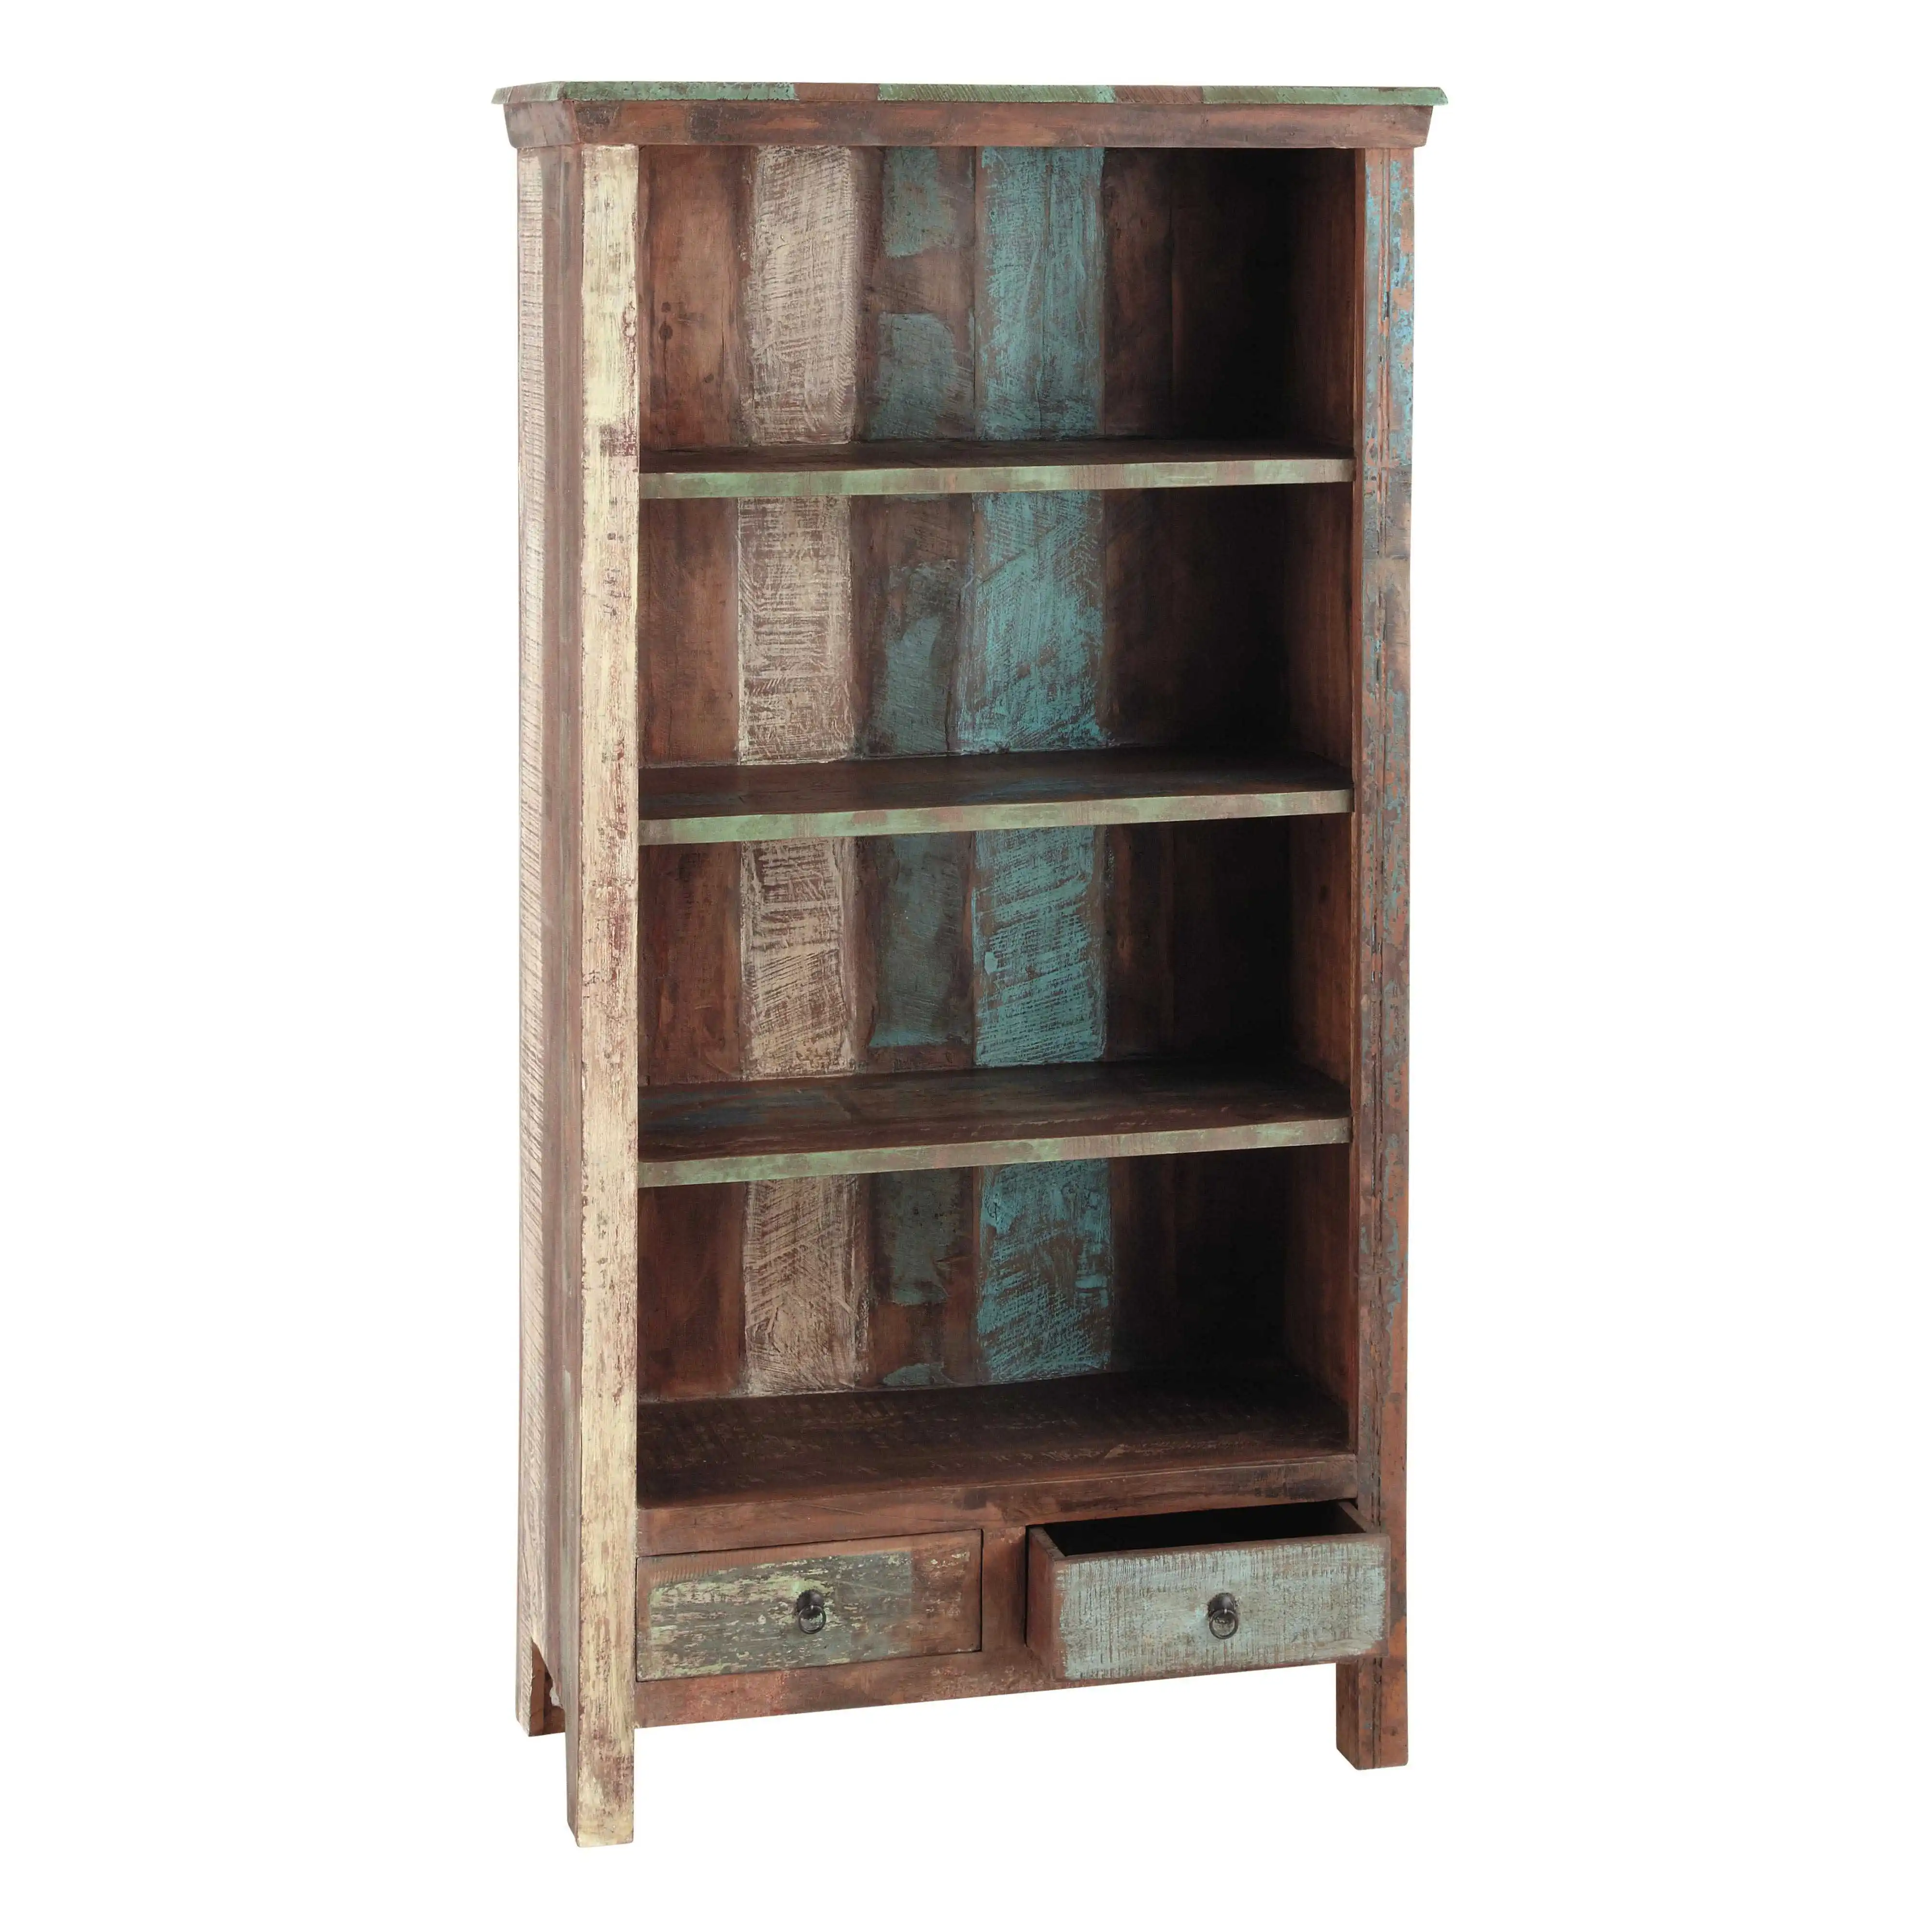 Reclaimed Wood Bookshelf with 4 Shelves & 2 Drawers - popular handicrafts